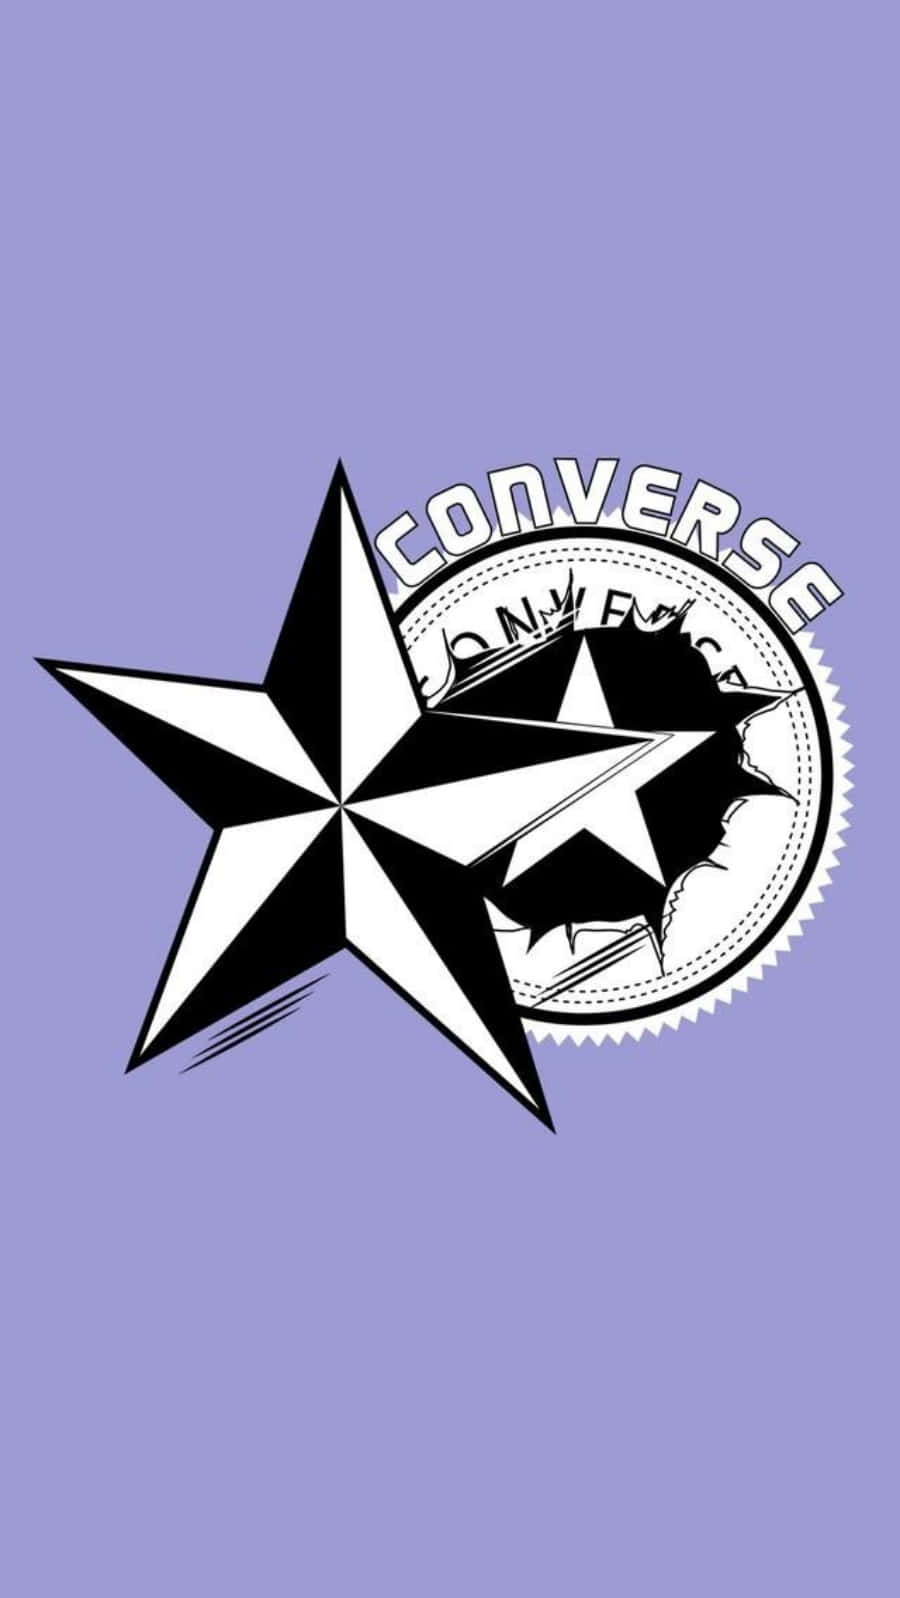 Converse Logo On A Purple Background